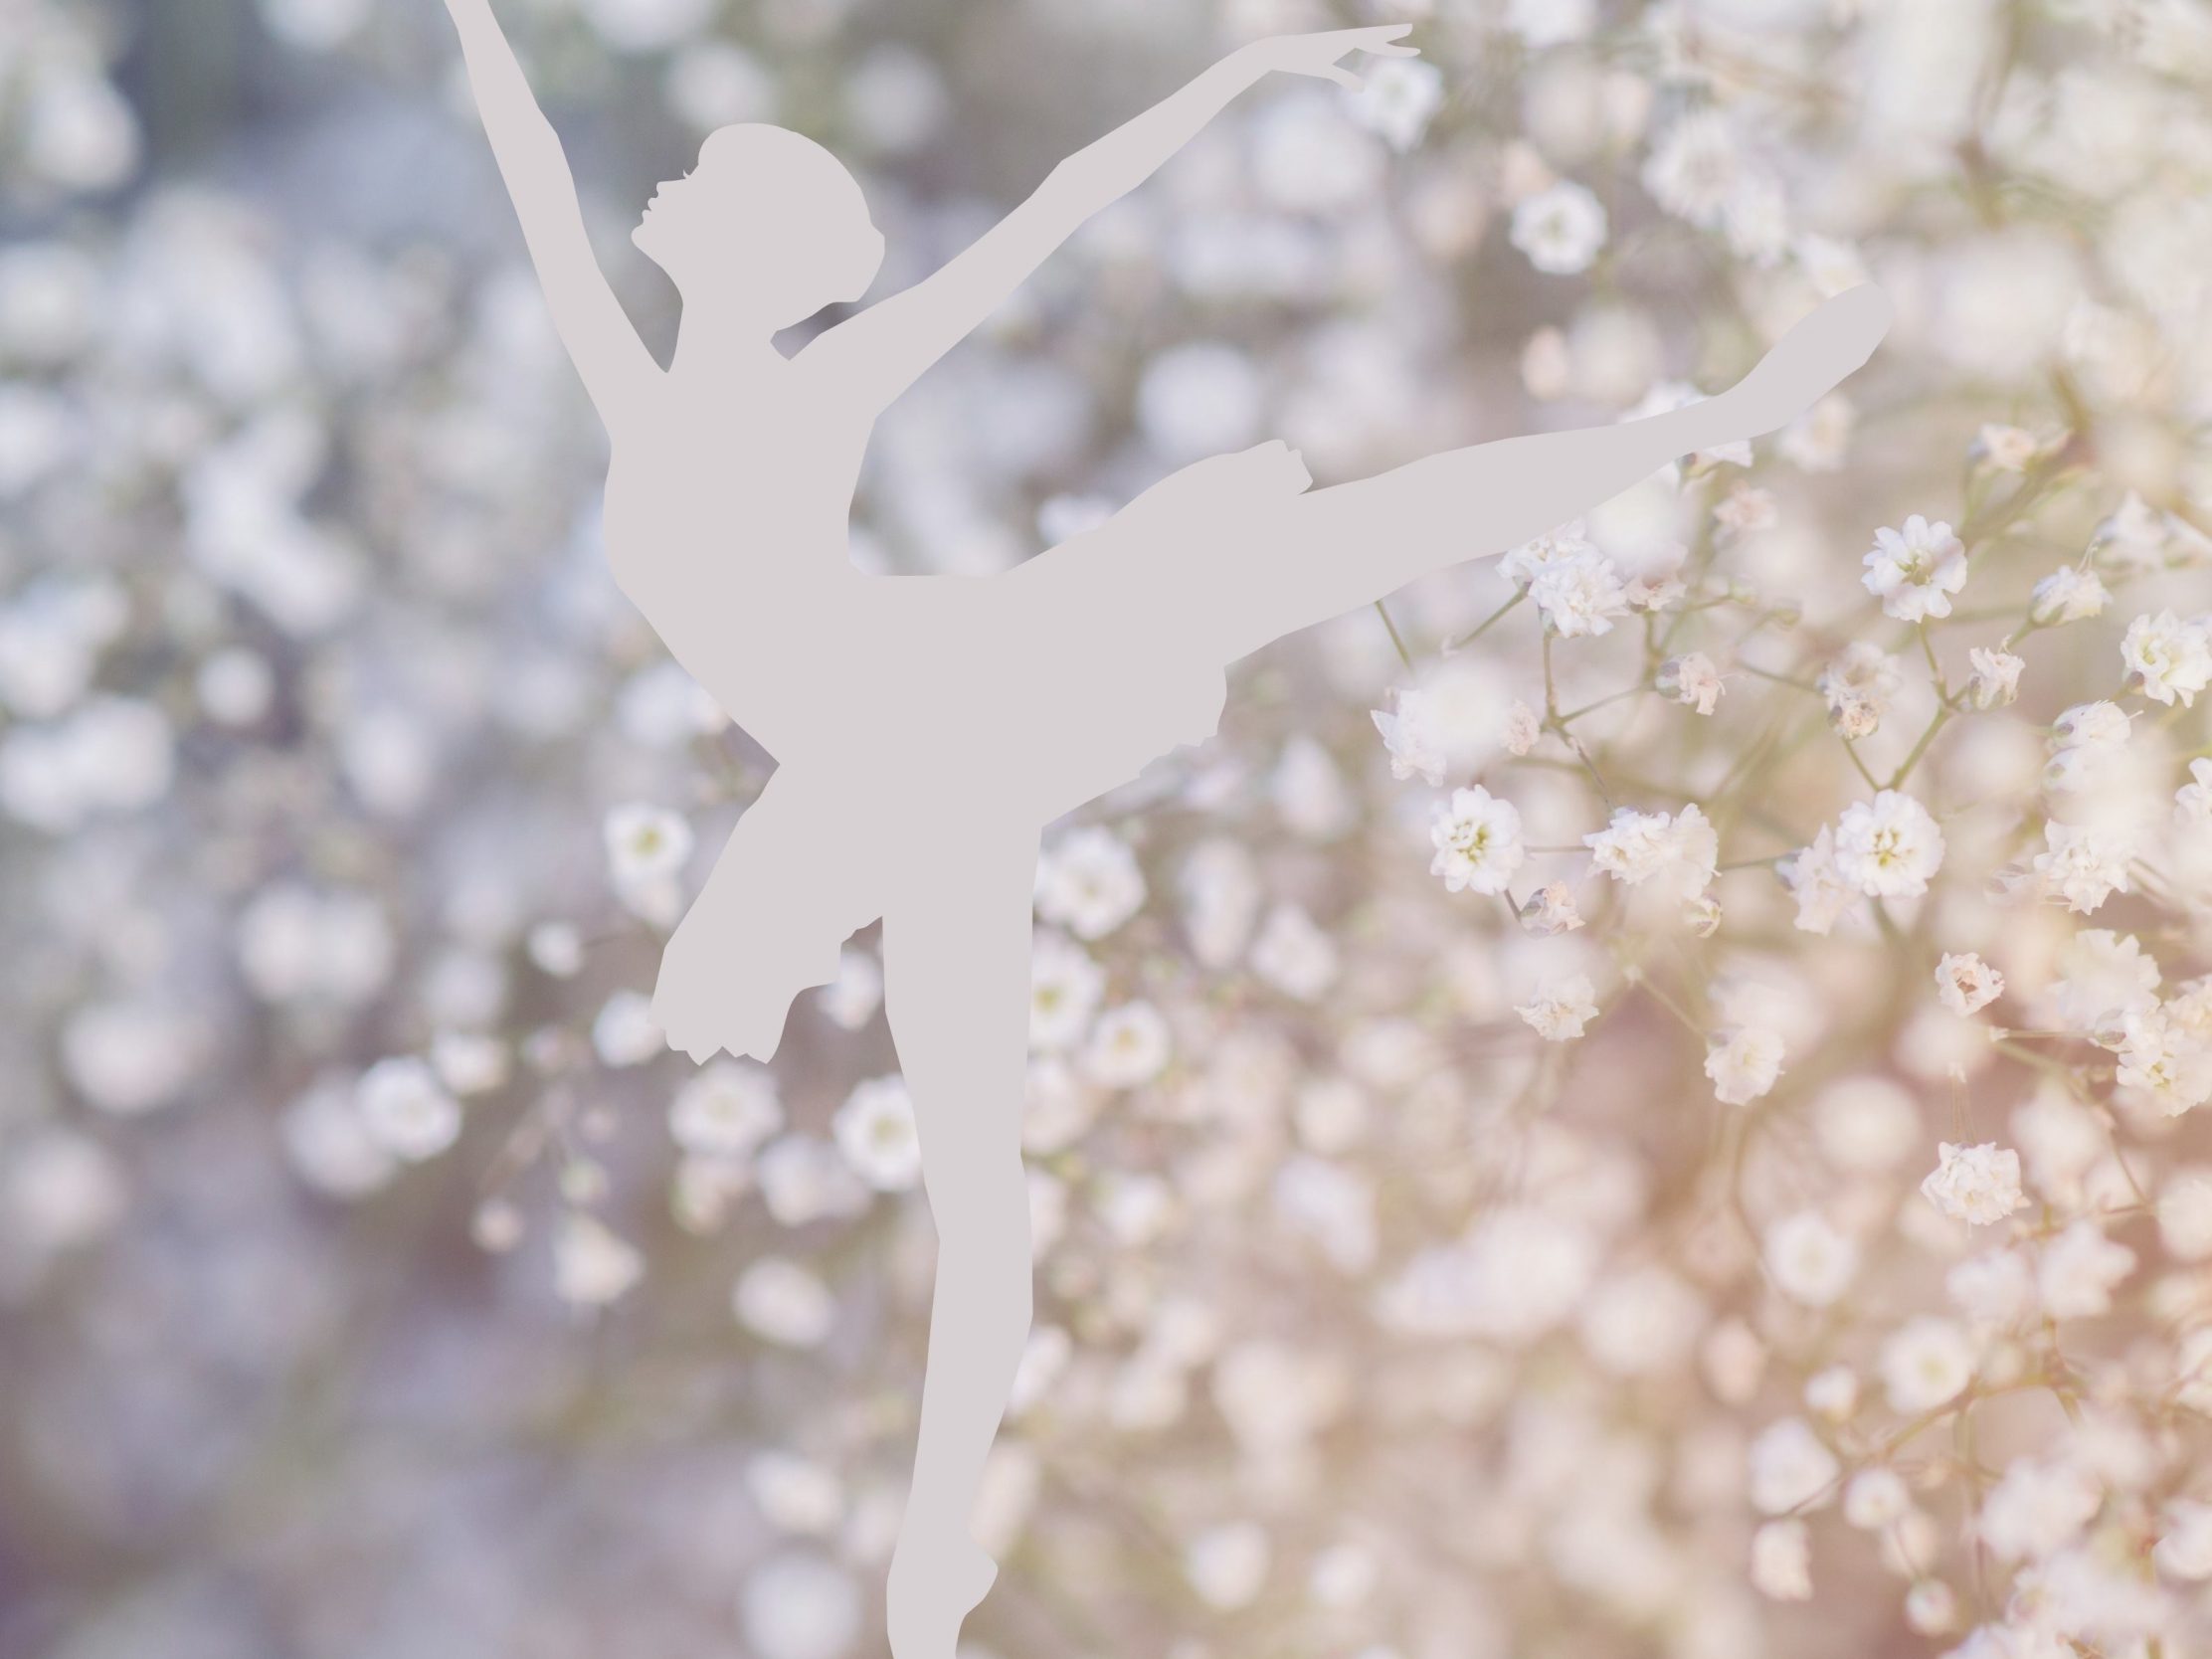 2224x1668 iPad Pro wallpapers Ballerina Girl Dance White Dandelion Flowers iPad Wallpaper 2224x1668 pixels resolution